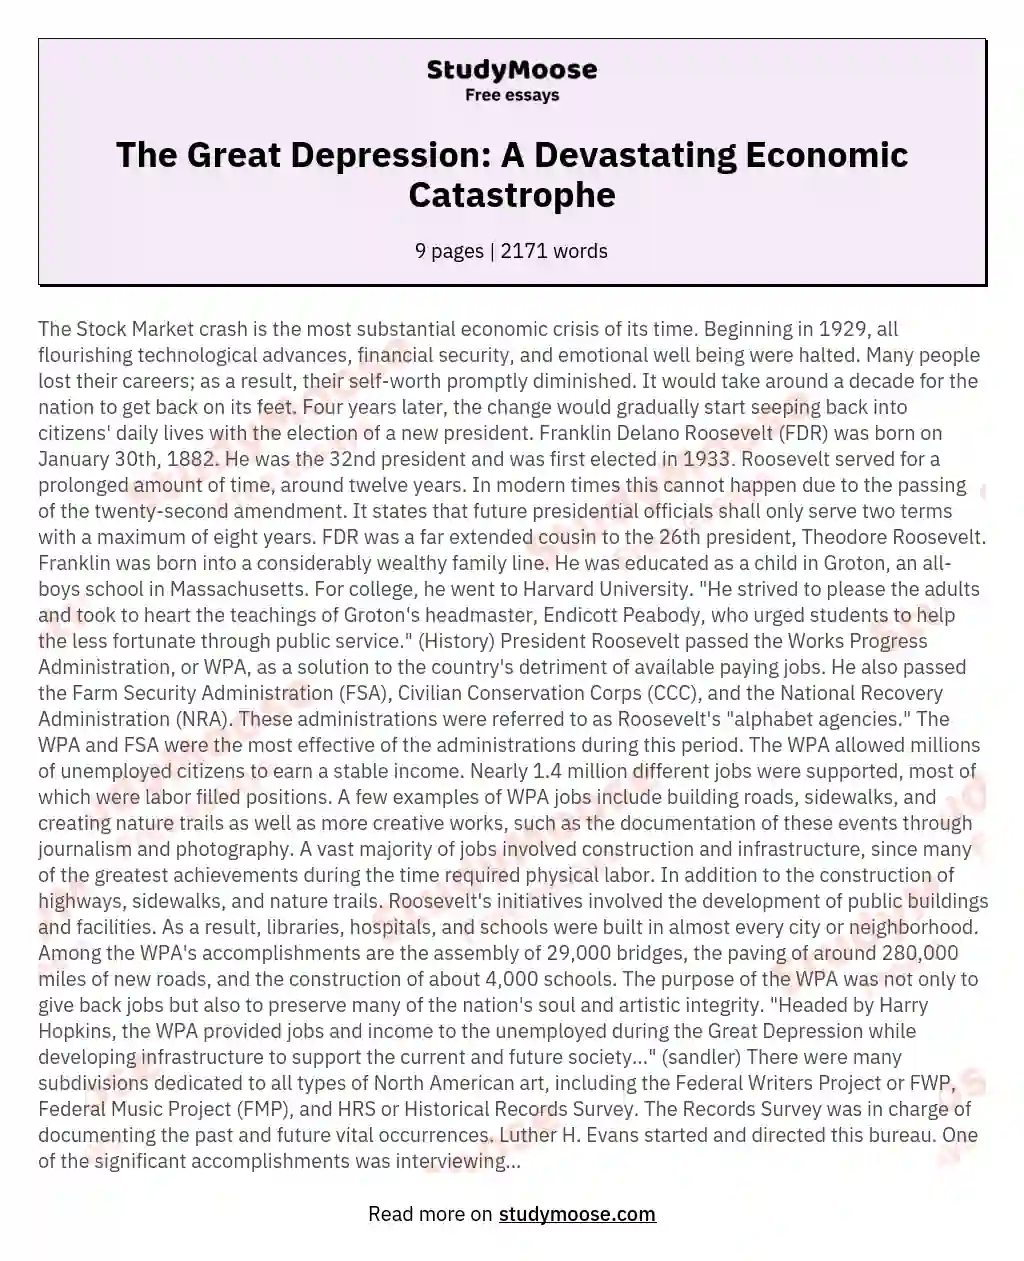 The Great Depression: A Devastating Economic Catastrophe essay